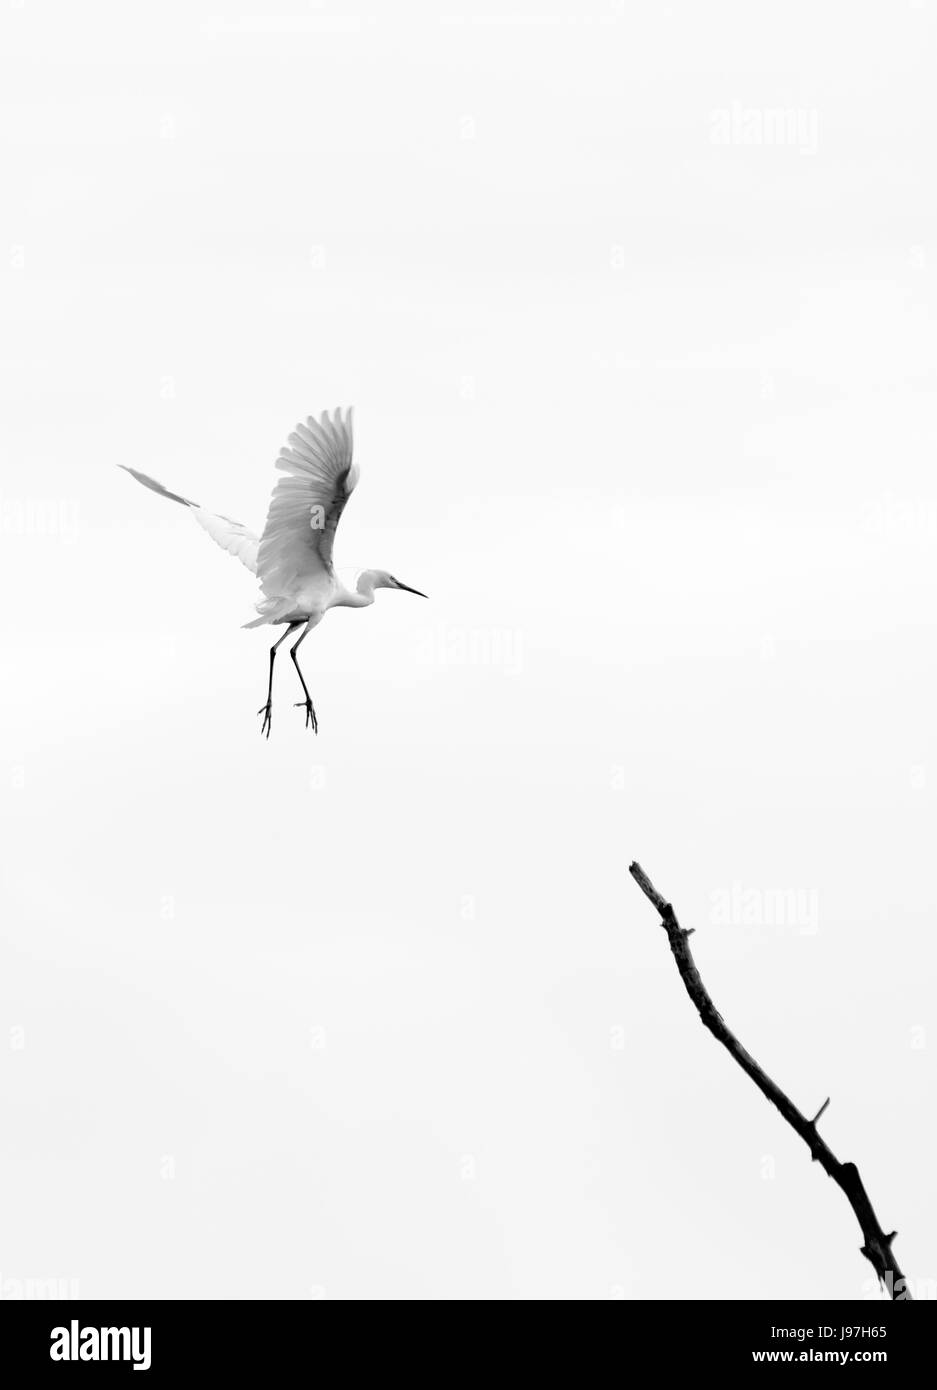 Heron bird landing on a branch Stock Photo